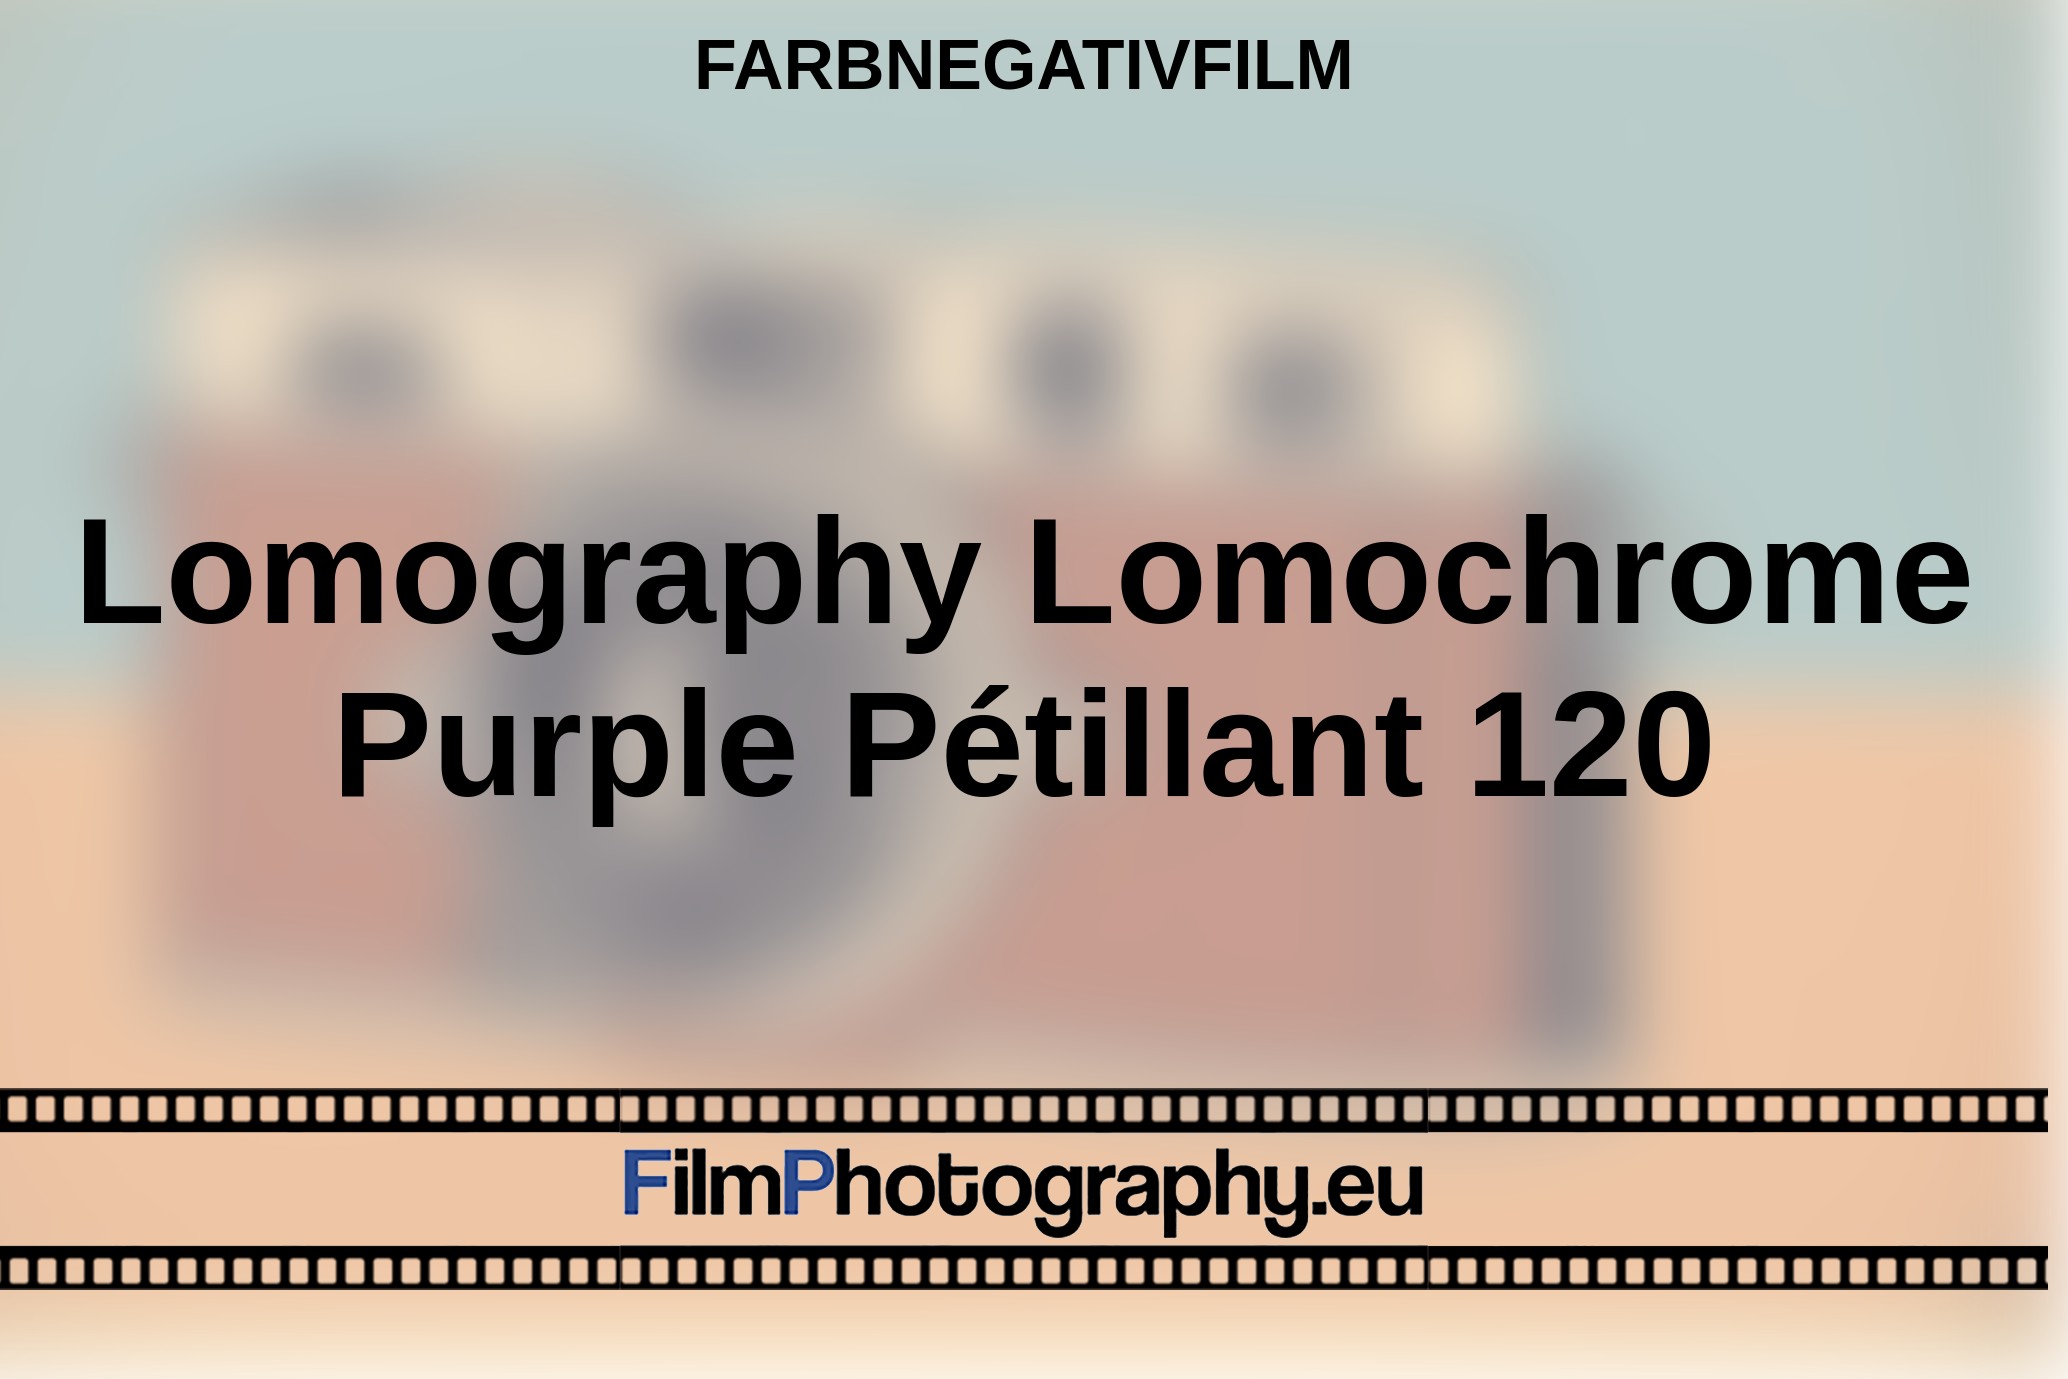 Lomography-Lomochrome-Purple-Pétillant-120-Farbnegativfilm-bnv.jpg